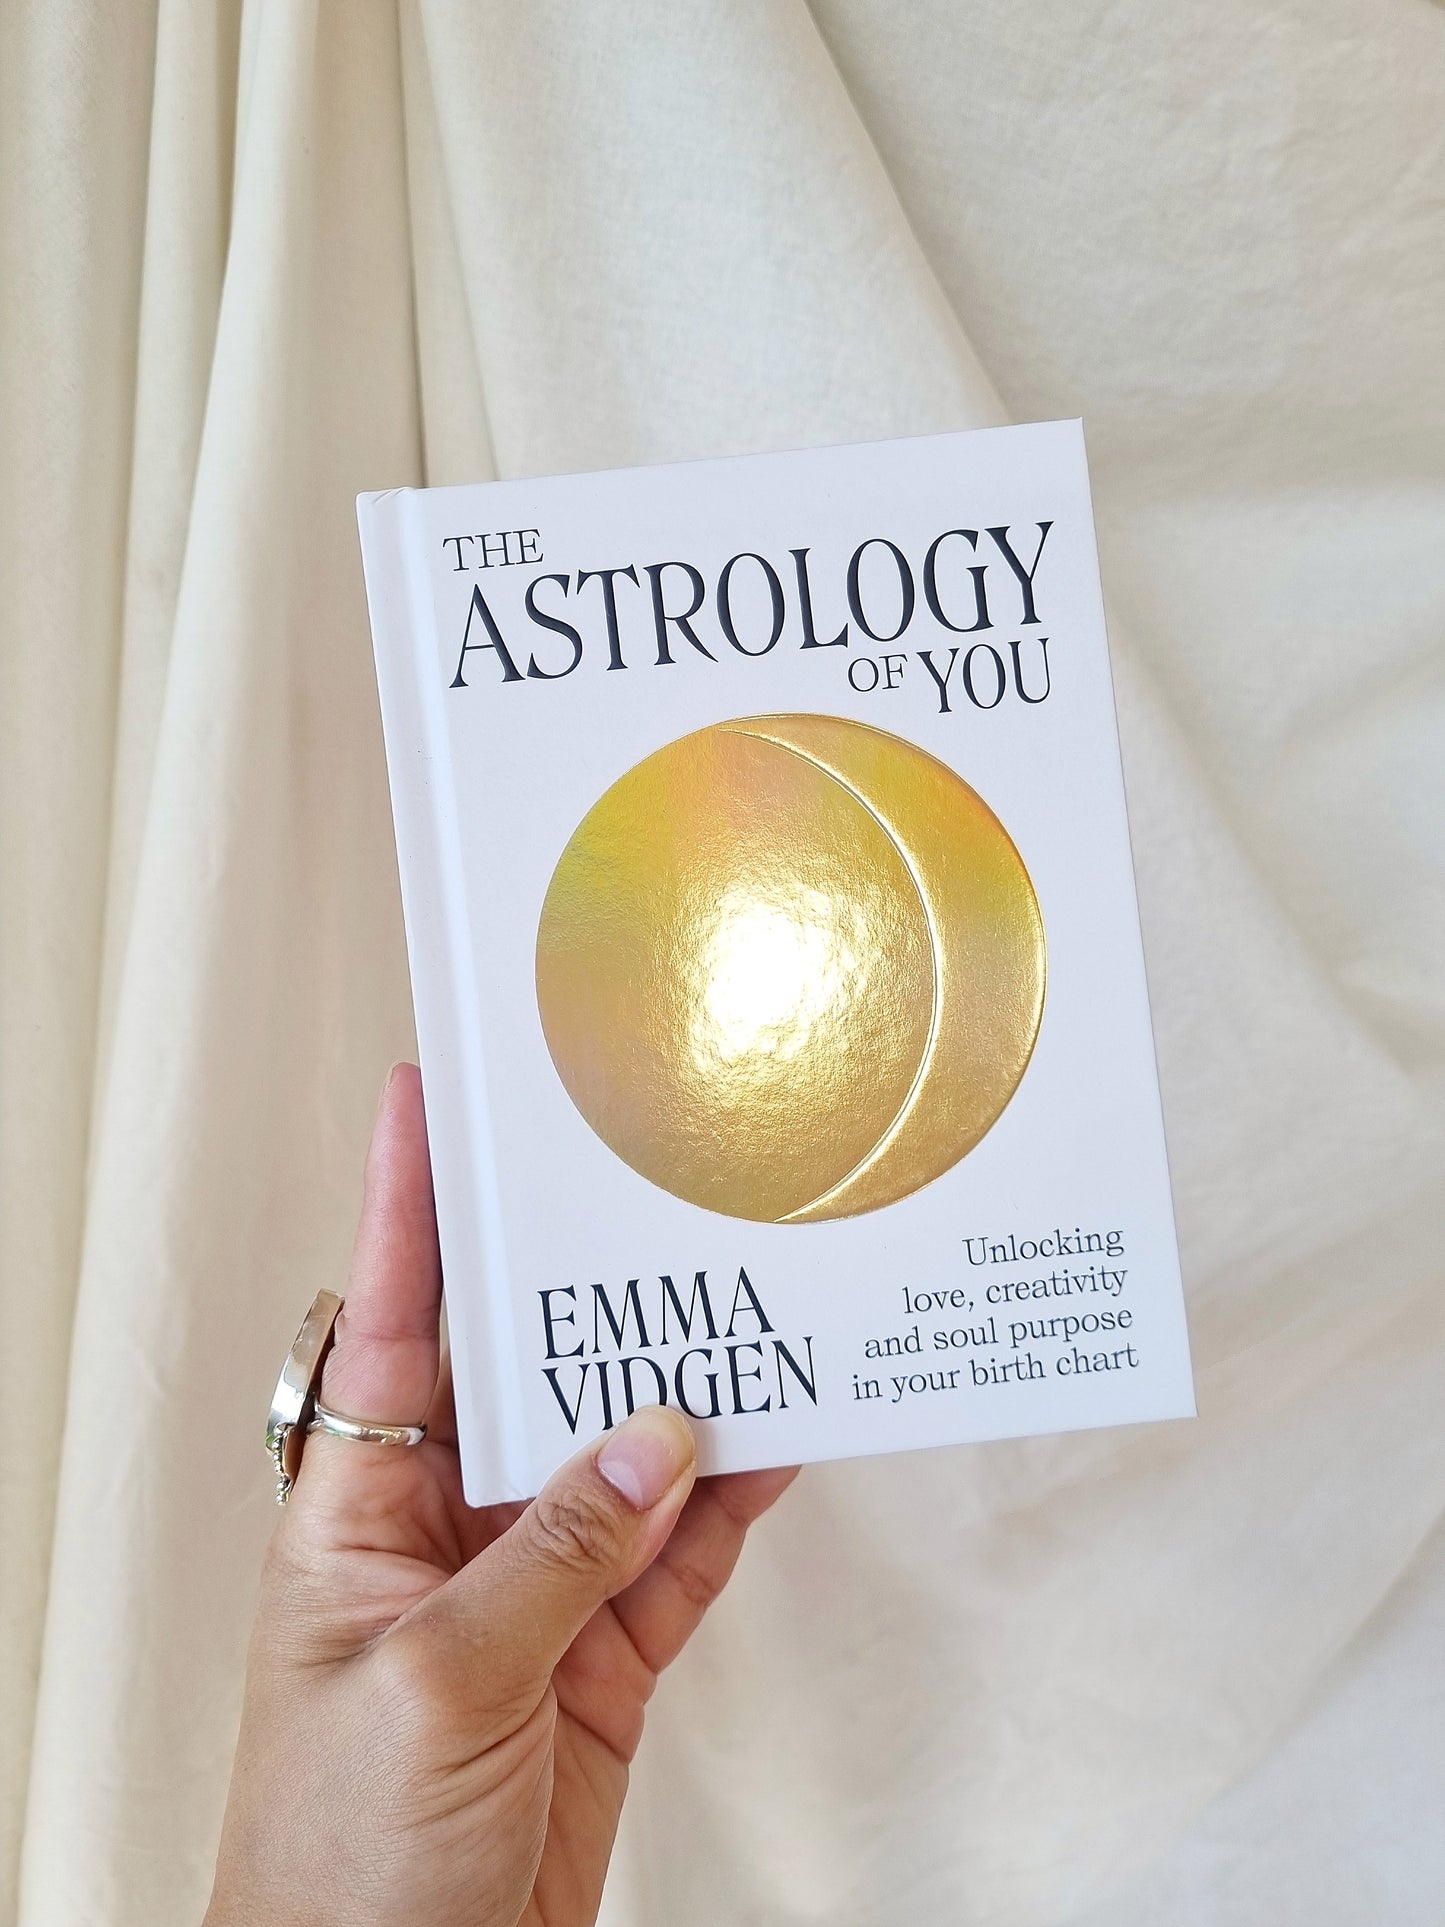 The Astrology Of You by Emma Vidgen